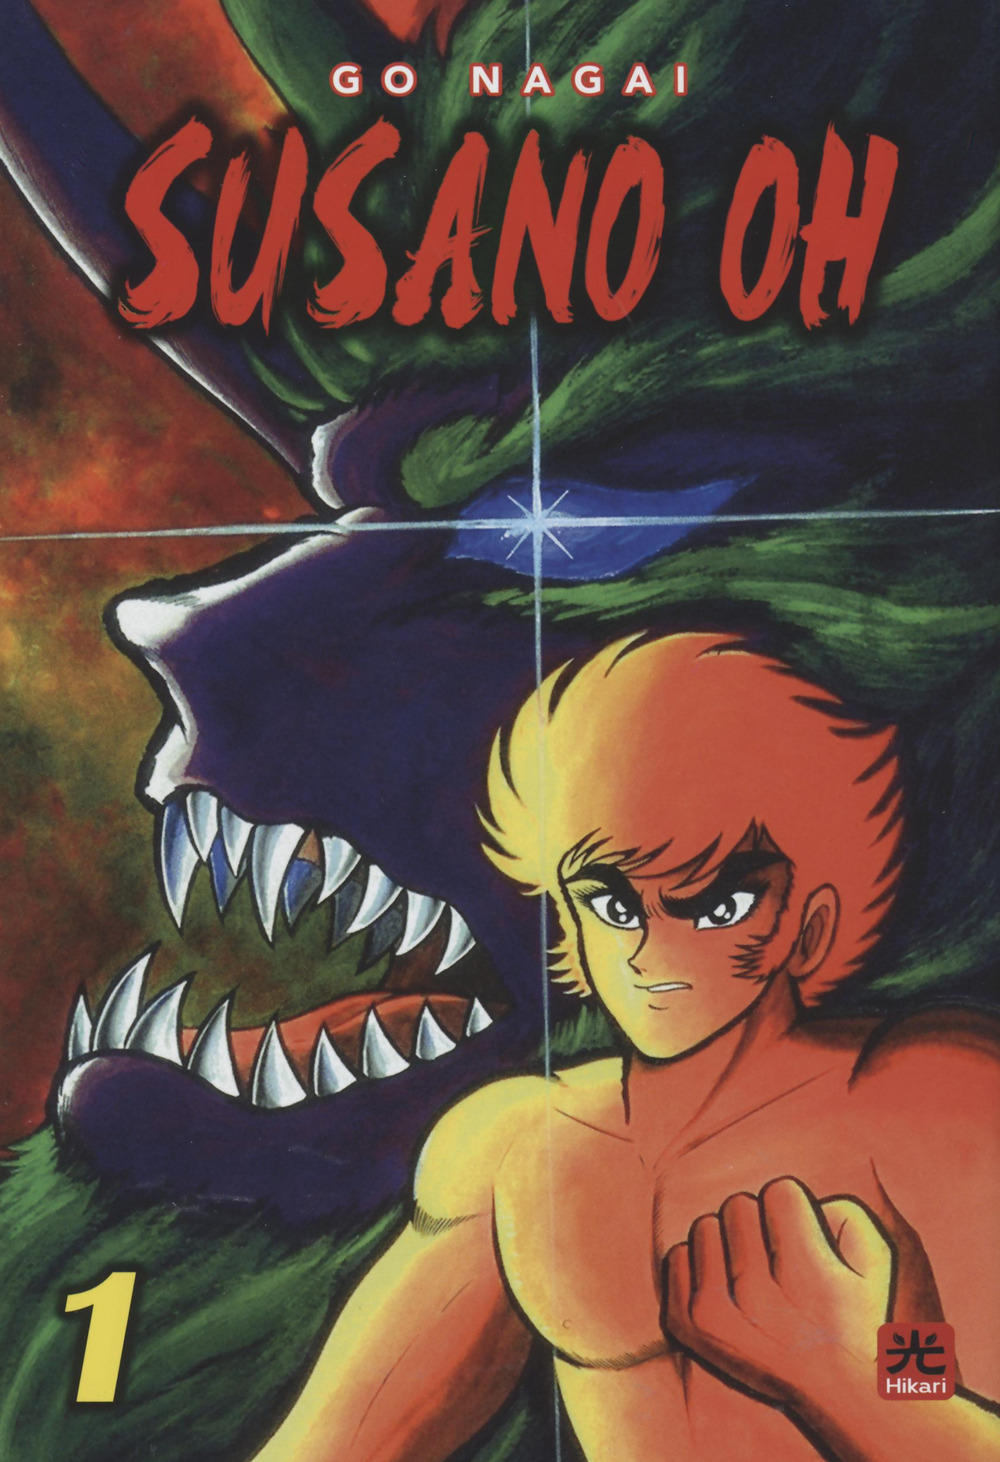 Manga – Hikari – Susano Oh #1